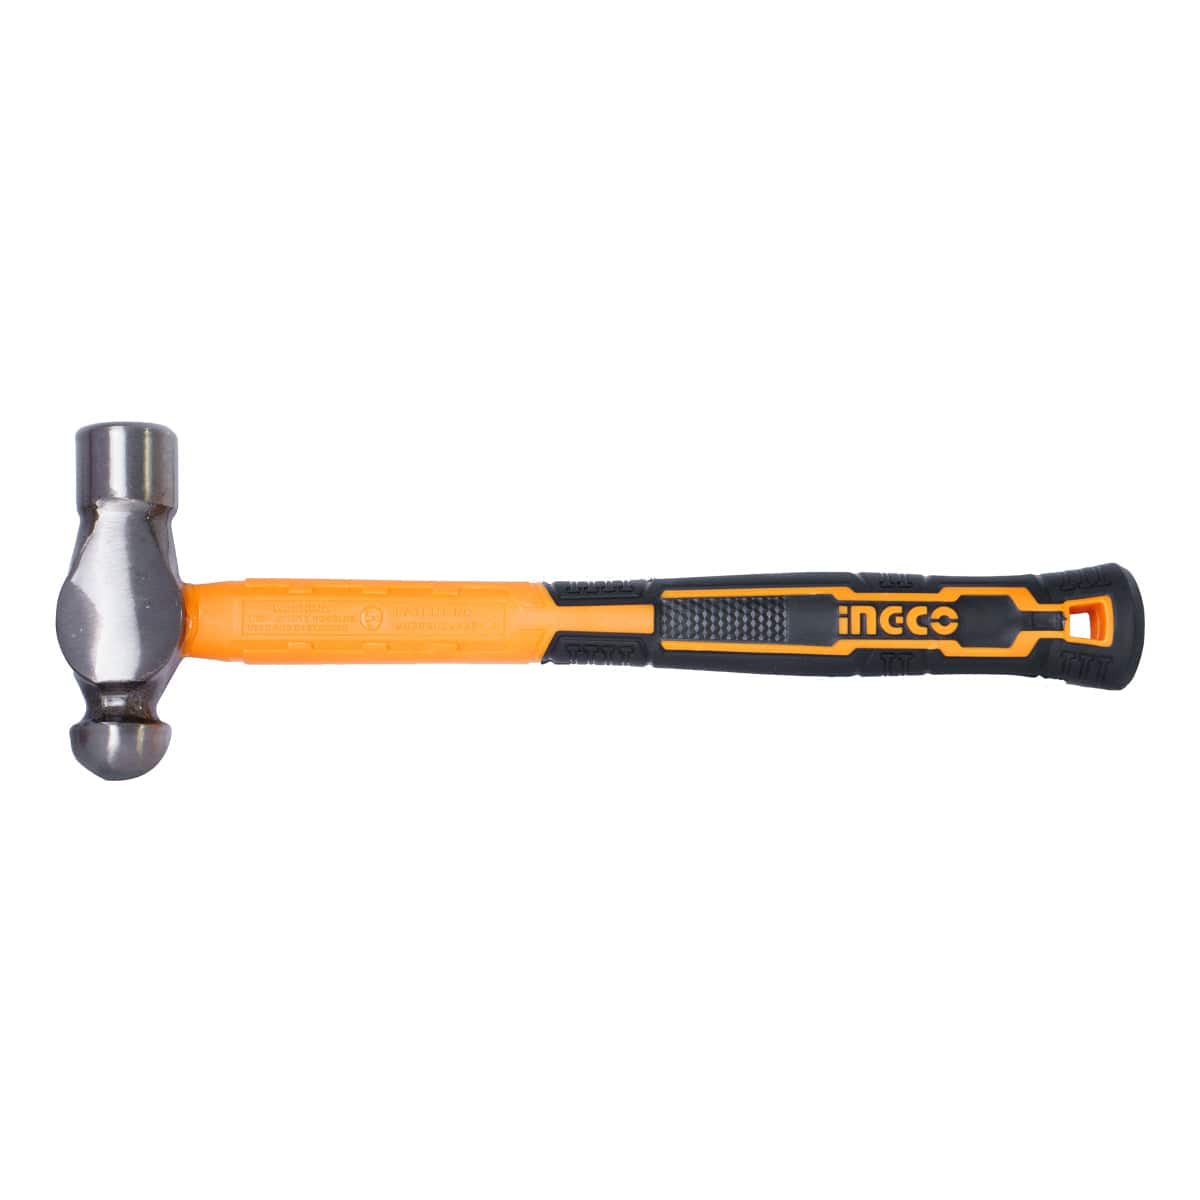 Ingco Ball Pein Hammer 450g - HBPHS8016, Supply Master